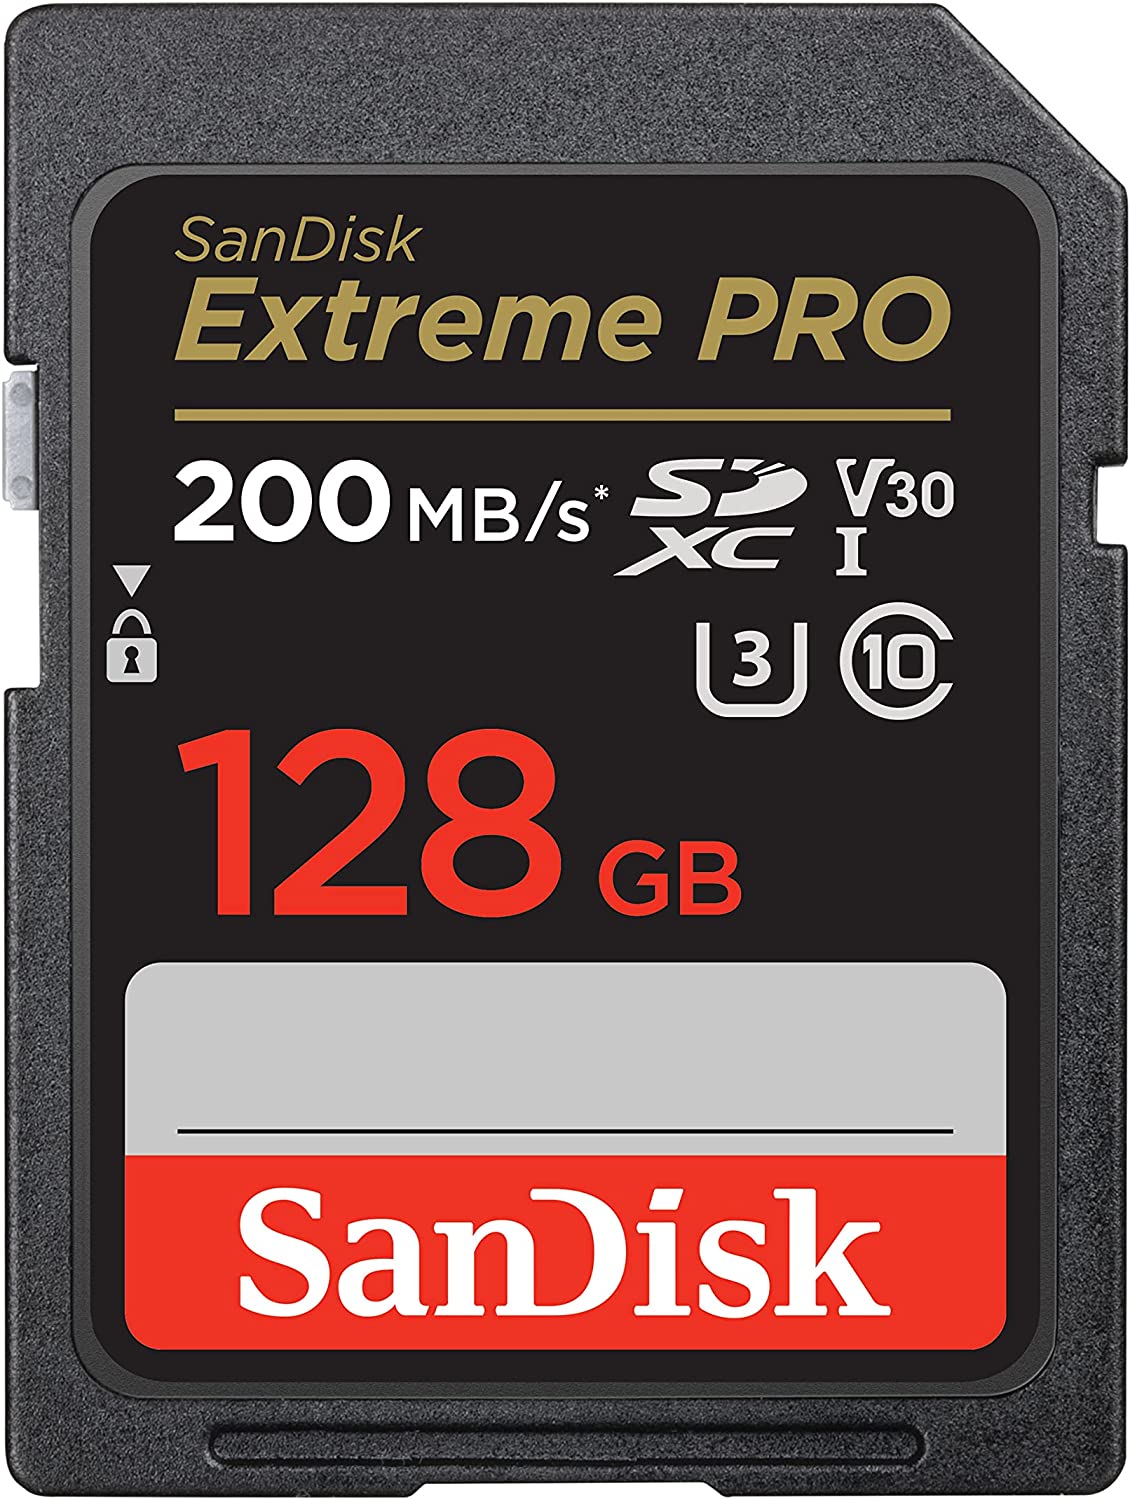 SanDisk Extreme PRO (200MB/s) 128GB